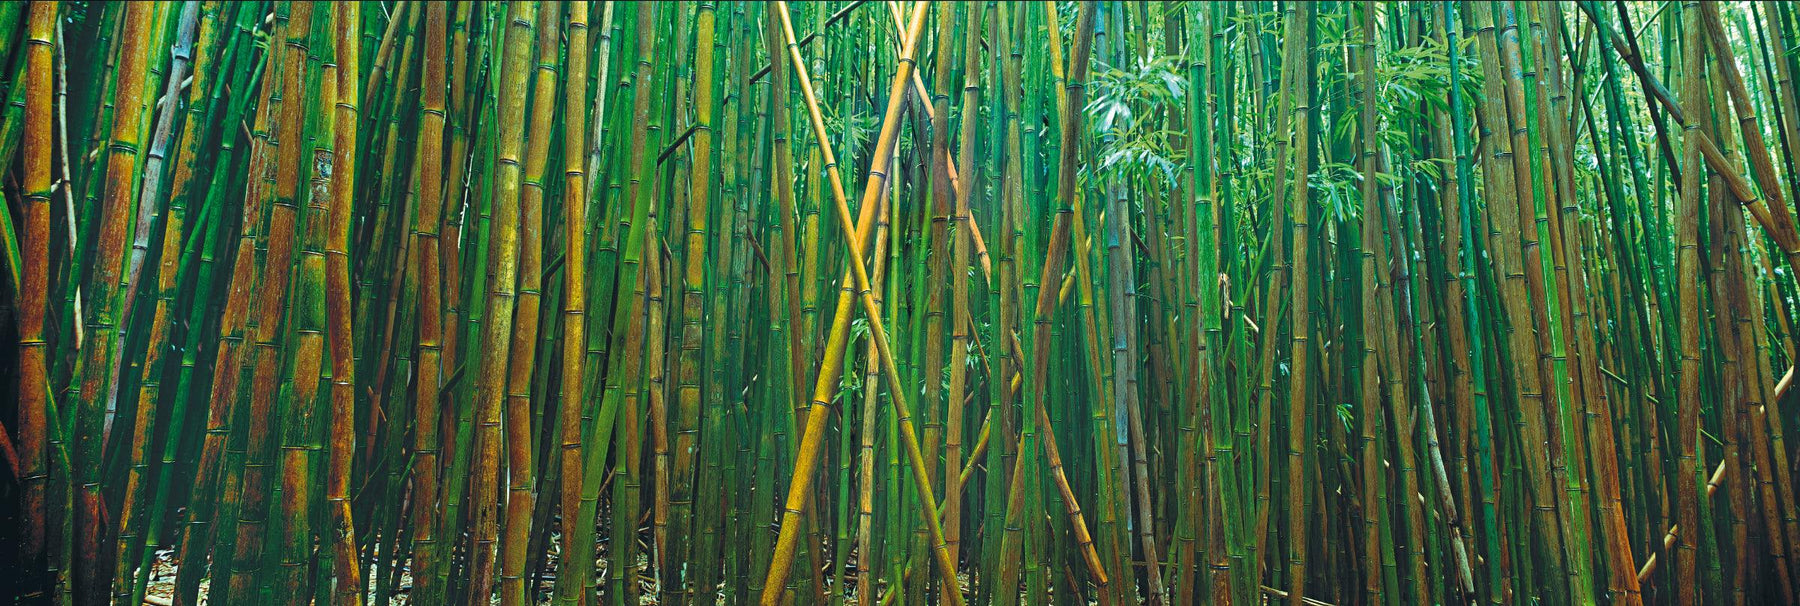 Wall of green bamboo along the path of Pipiwai Trail Hawaii